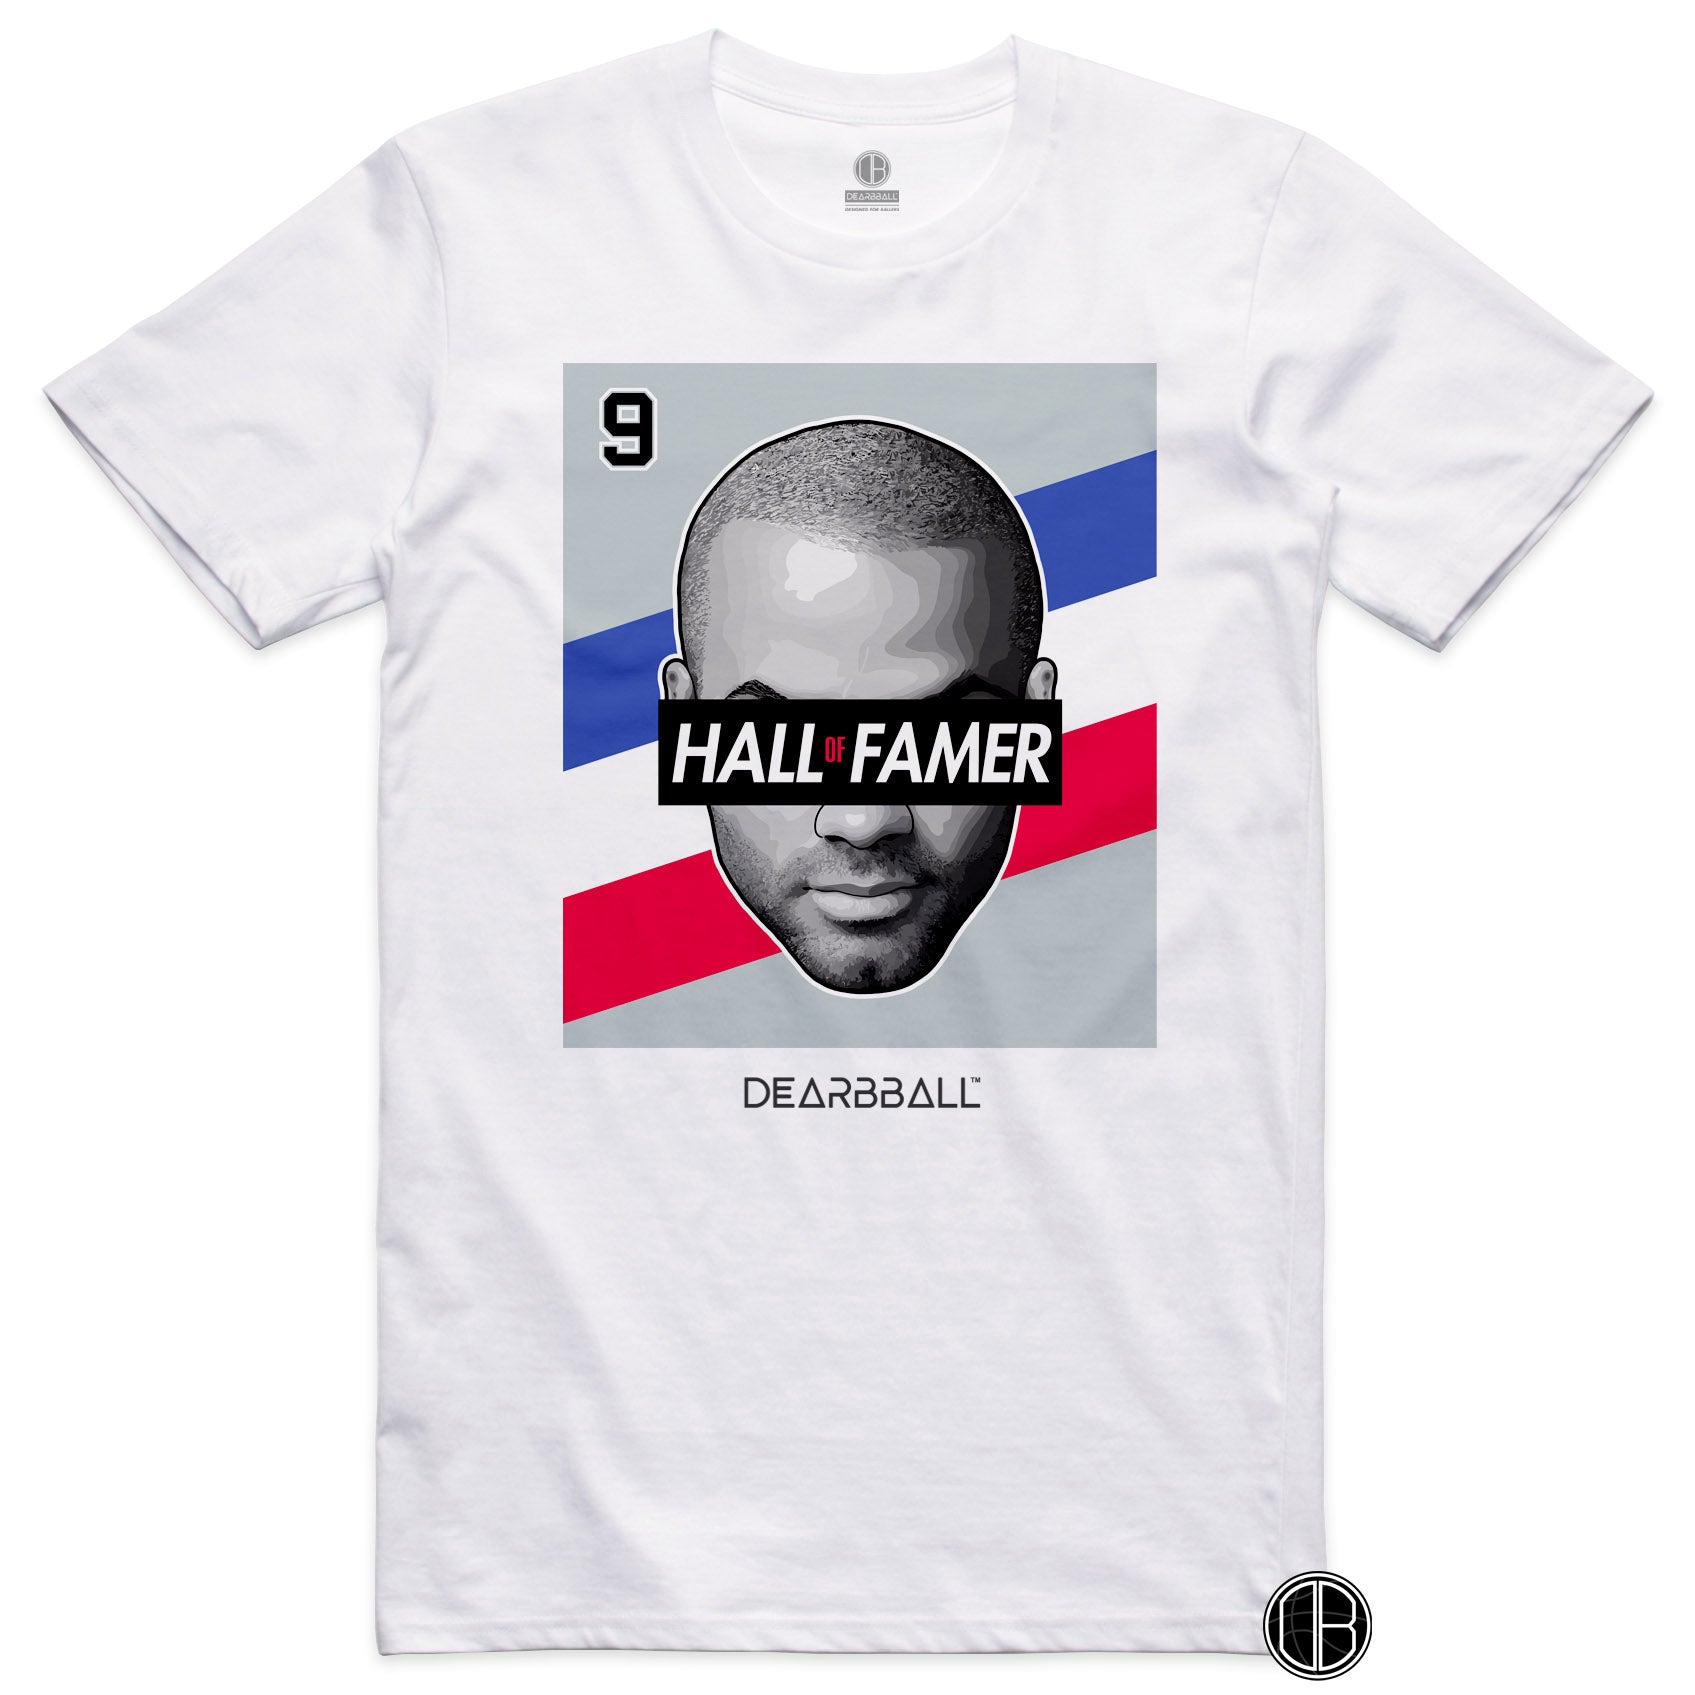 Maglietta DearBBall - HALL of FAMER 9 Francia